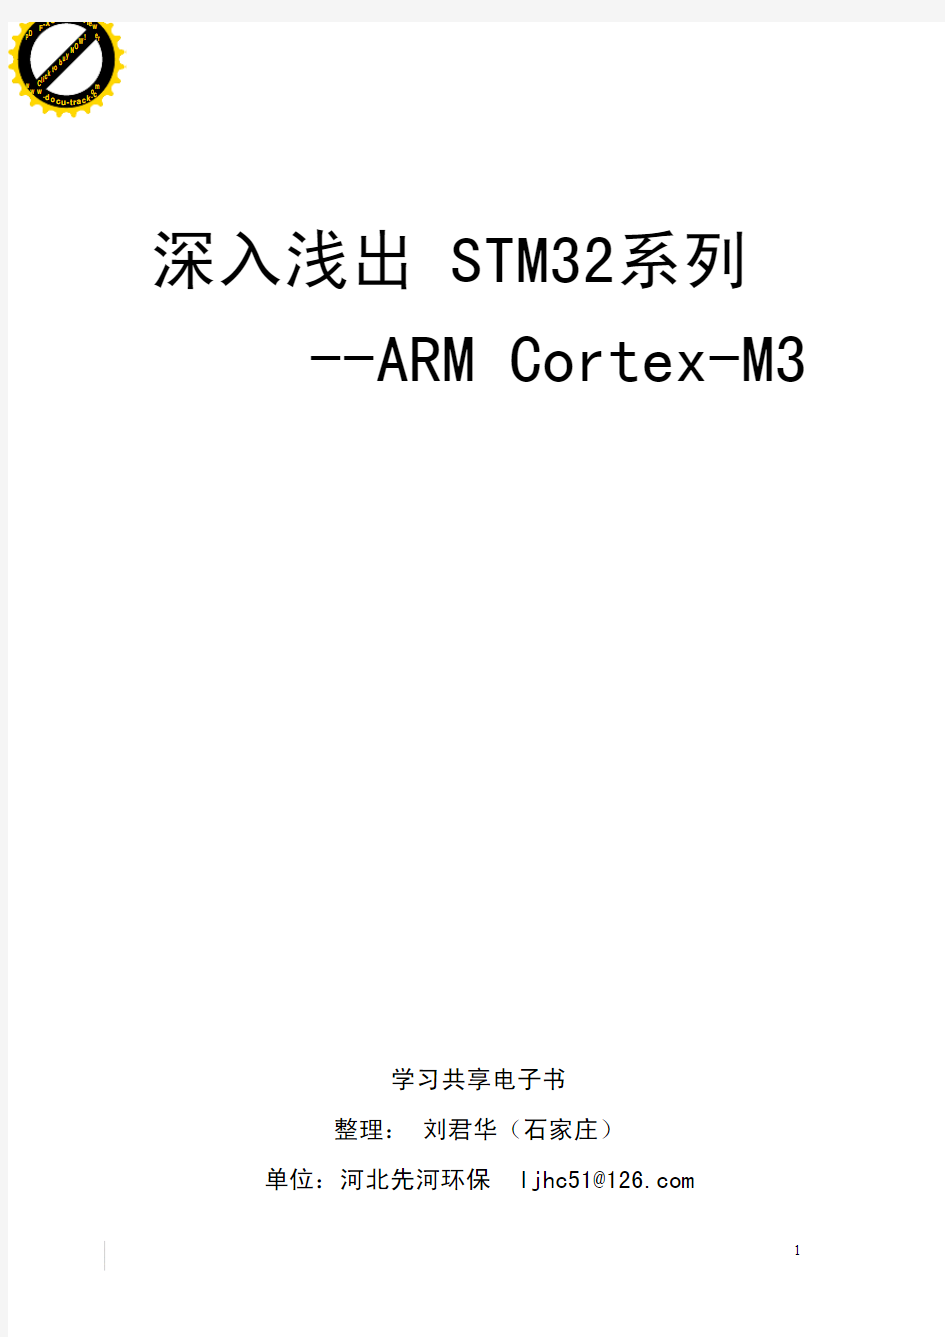 STM32初学者必用——类似的教程